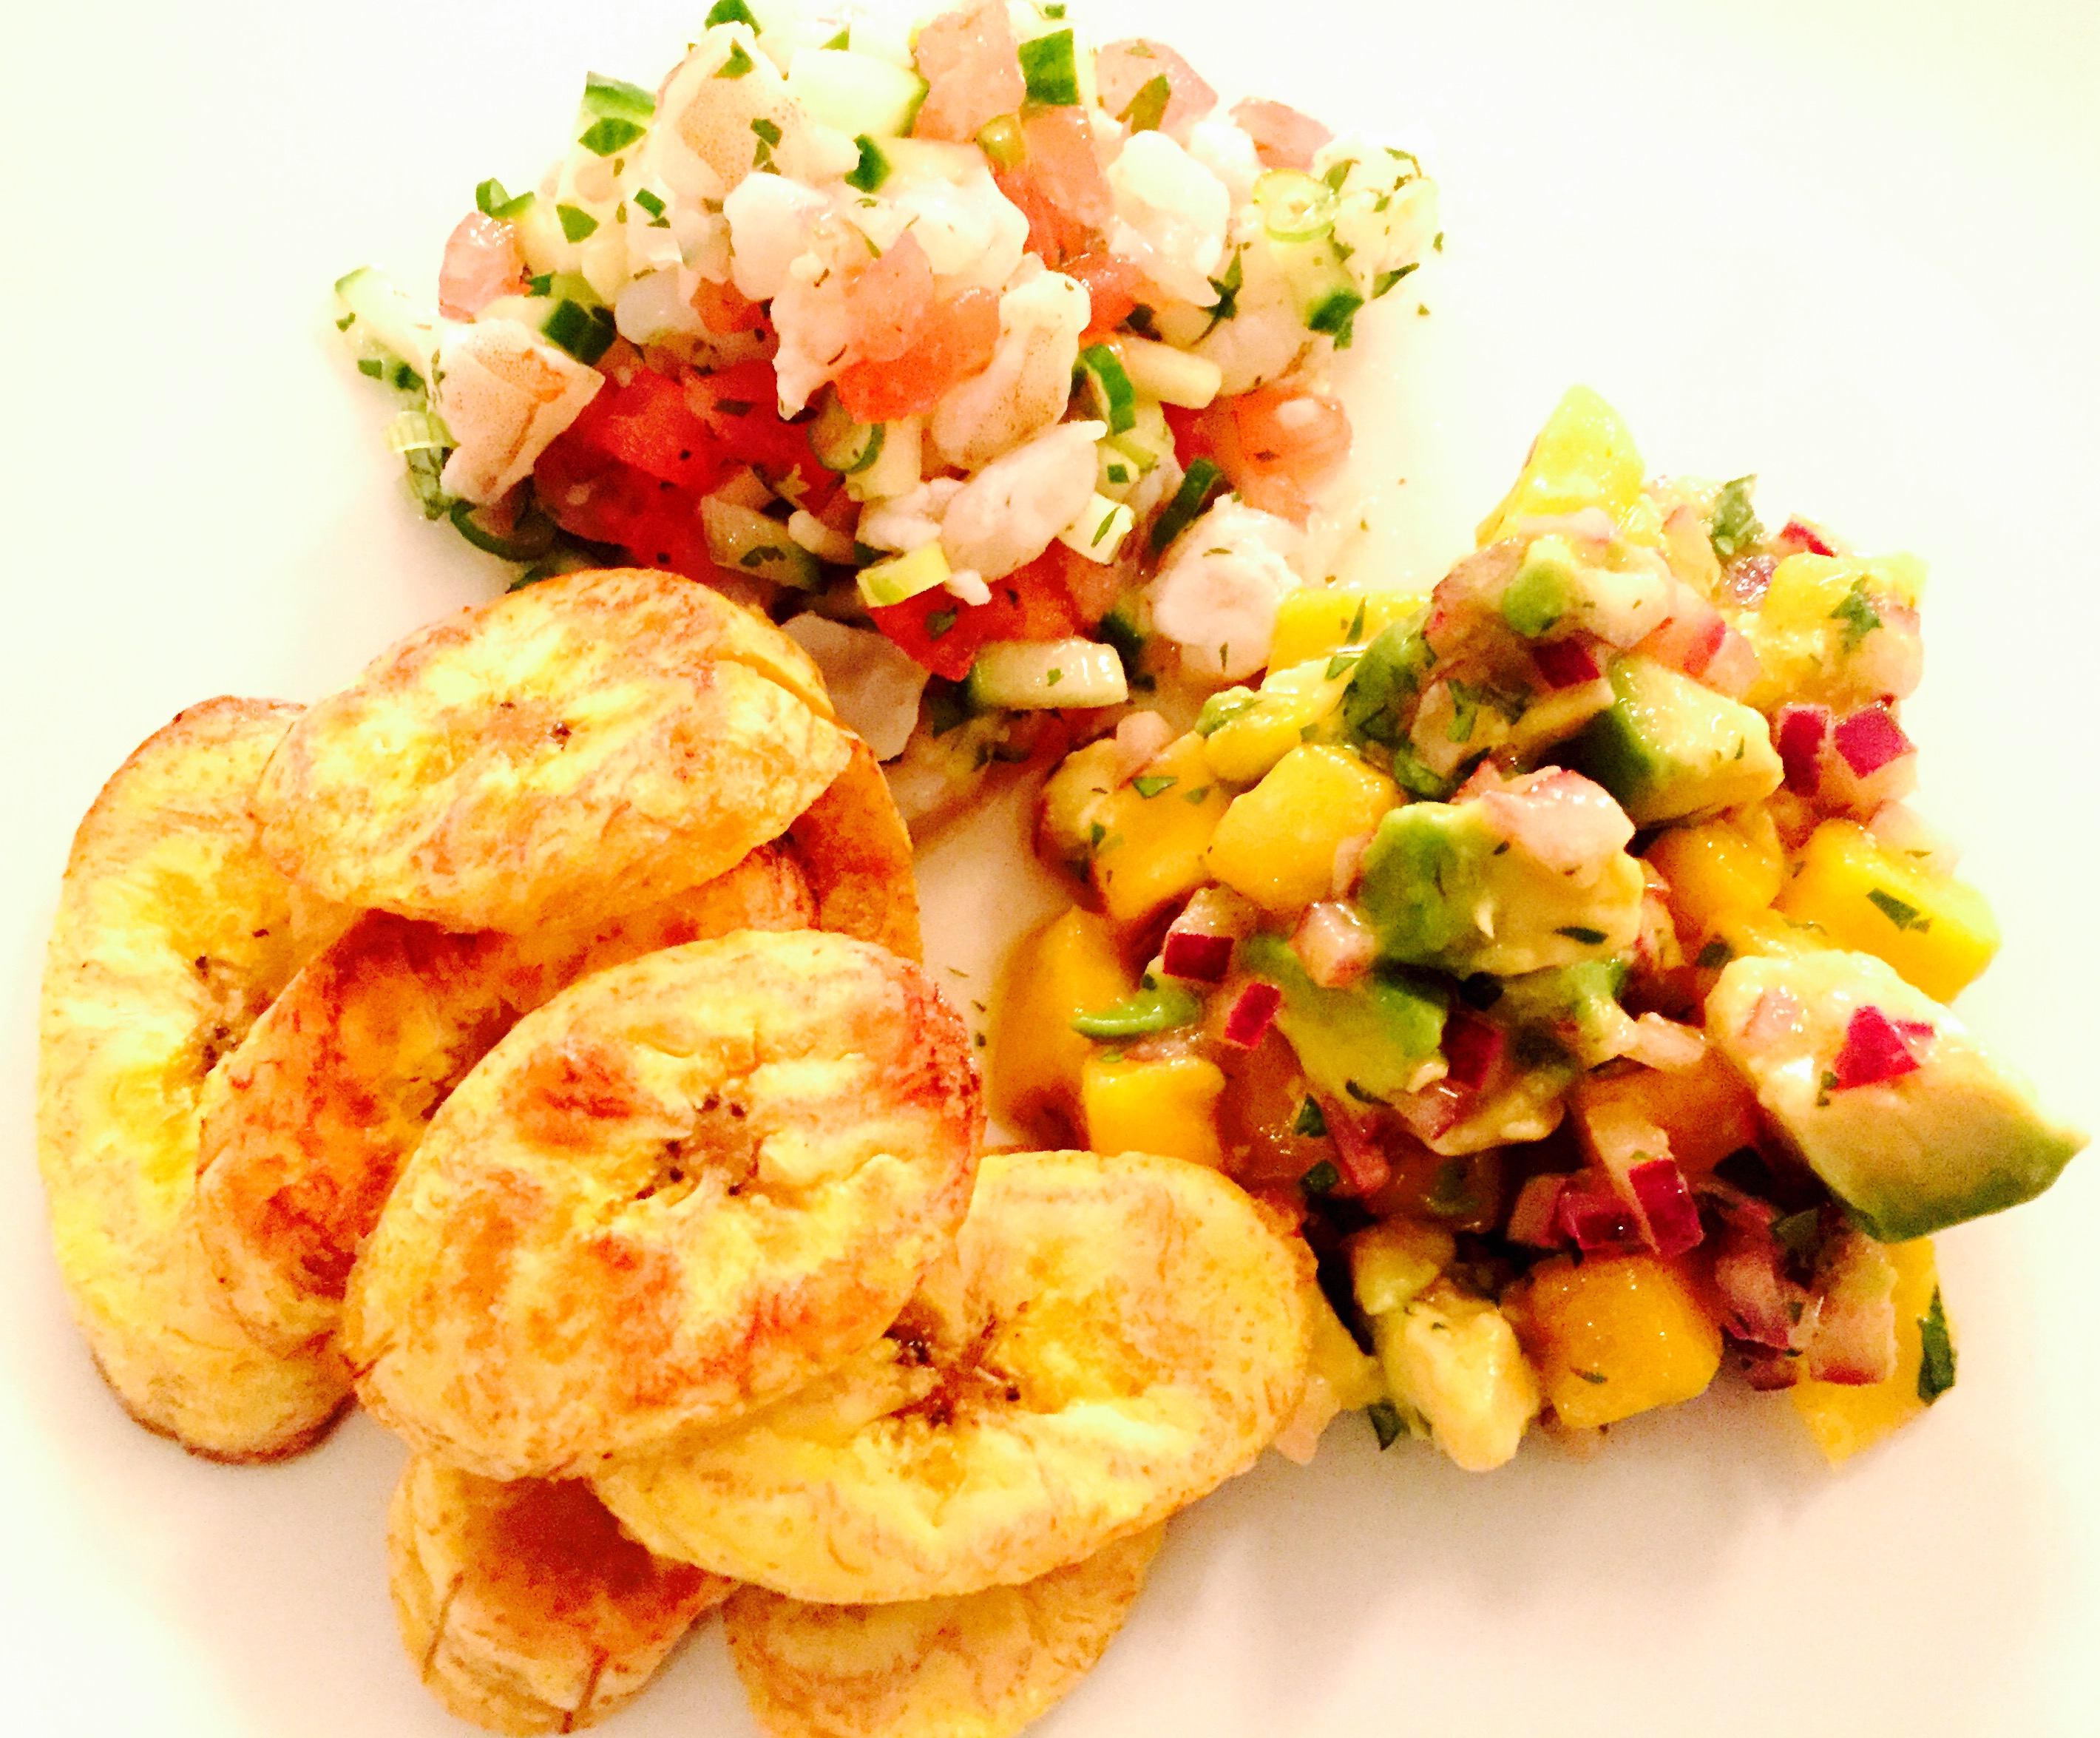 Honduran shrimp seviche with plantain chips and mango/ avocado salsa